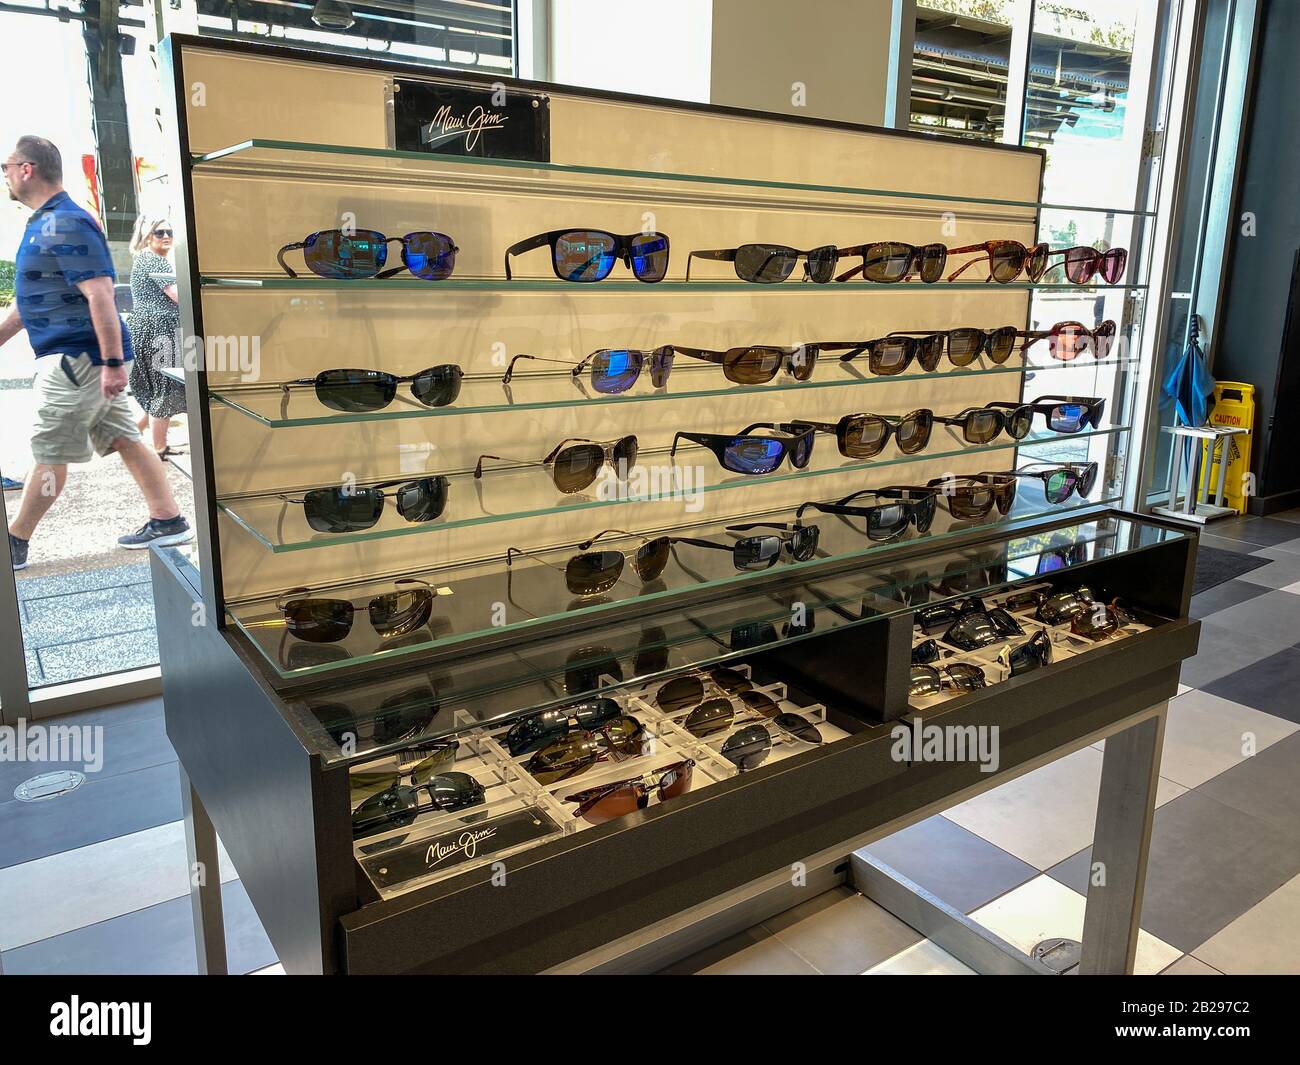 orlandoflusa 21720 a display of maui jim sunglasses at sunglass hut retail store at a mall sunglass hut is an international retailer of sunglas 2B297C2